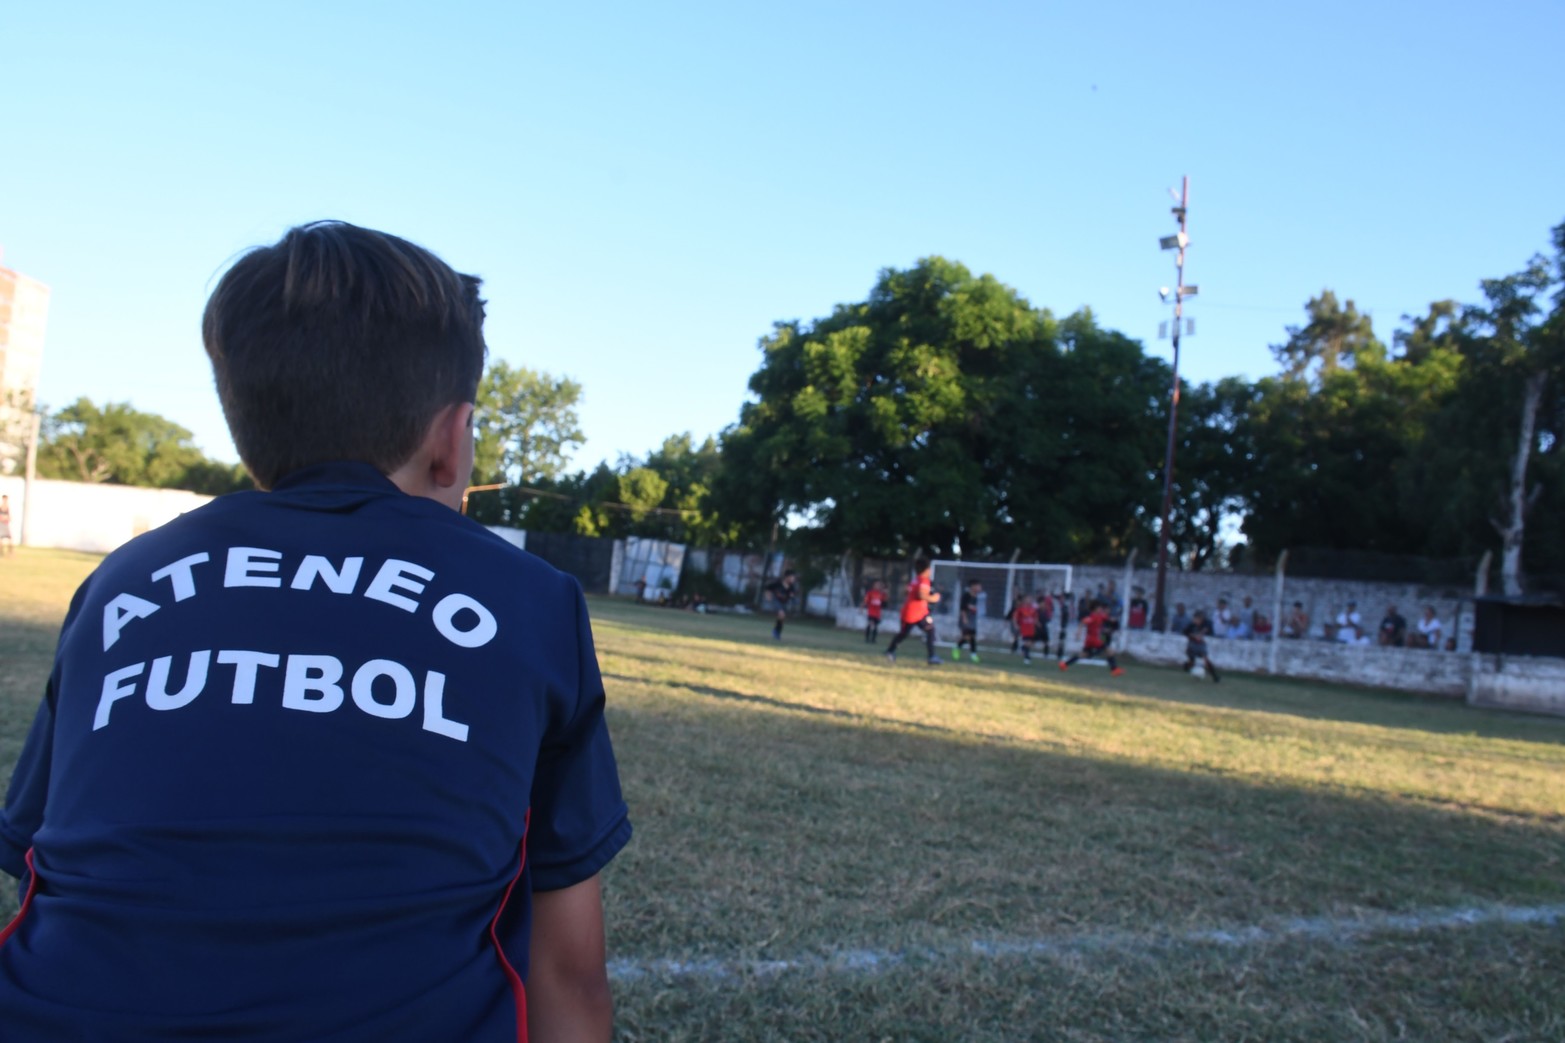 El club Nacional realizó su primer torneo de futbol infantil